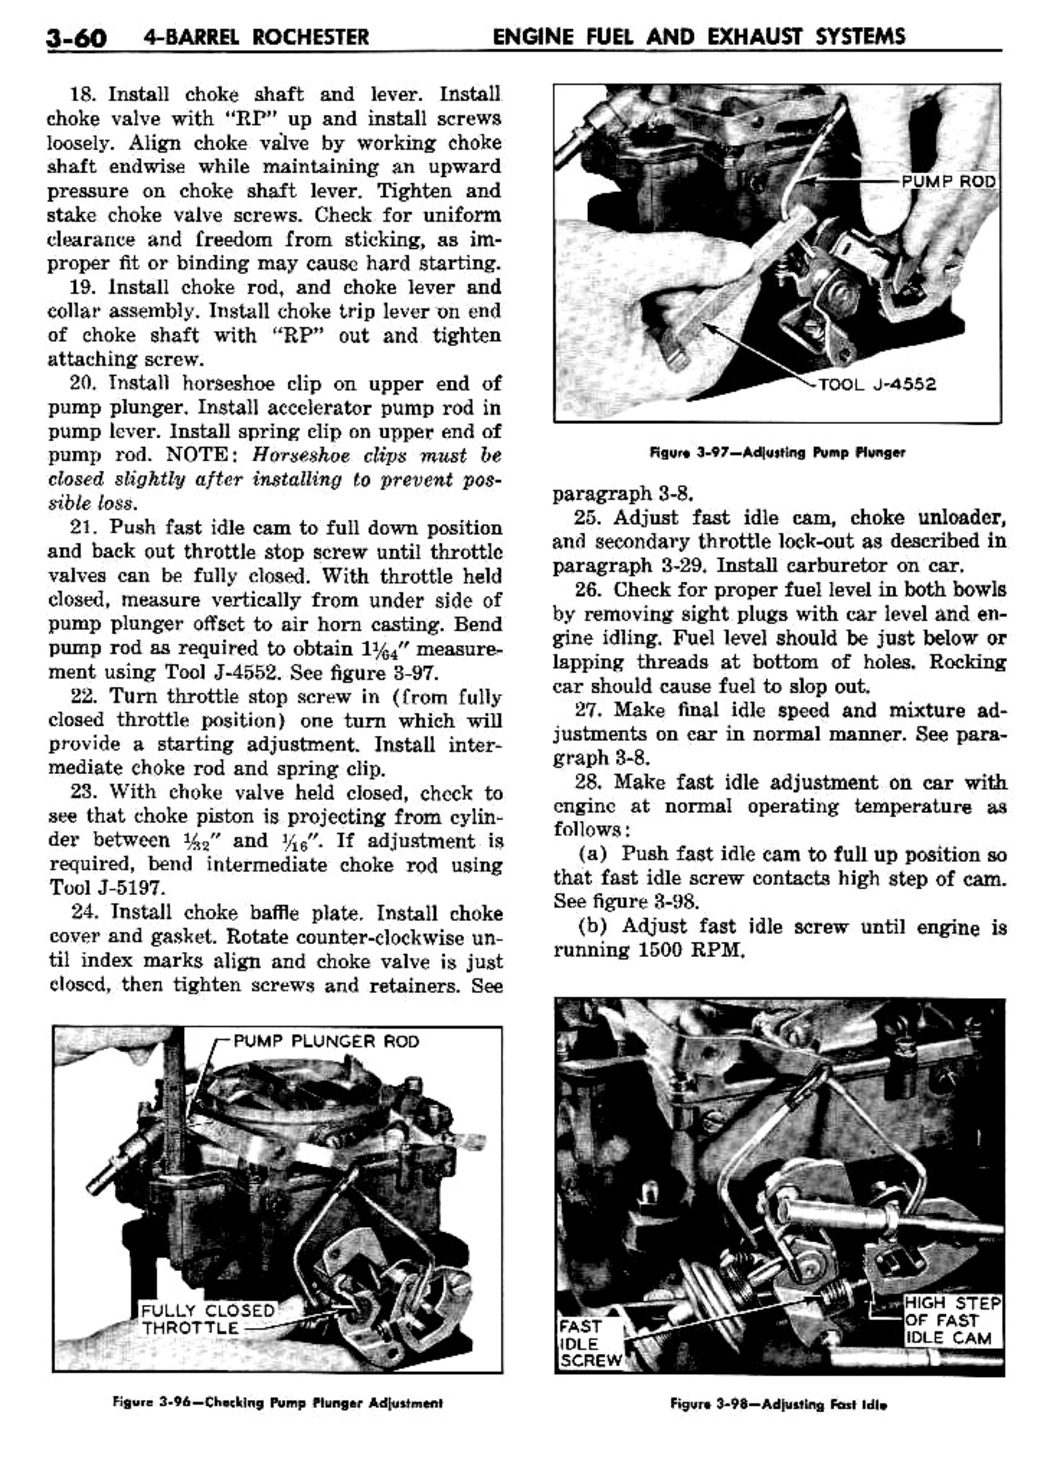 n_04 1957 Buick Shop Manual - Engine Fuel & Exhaust-060-060.jpg